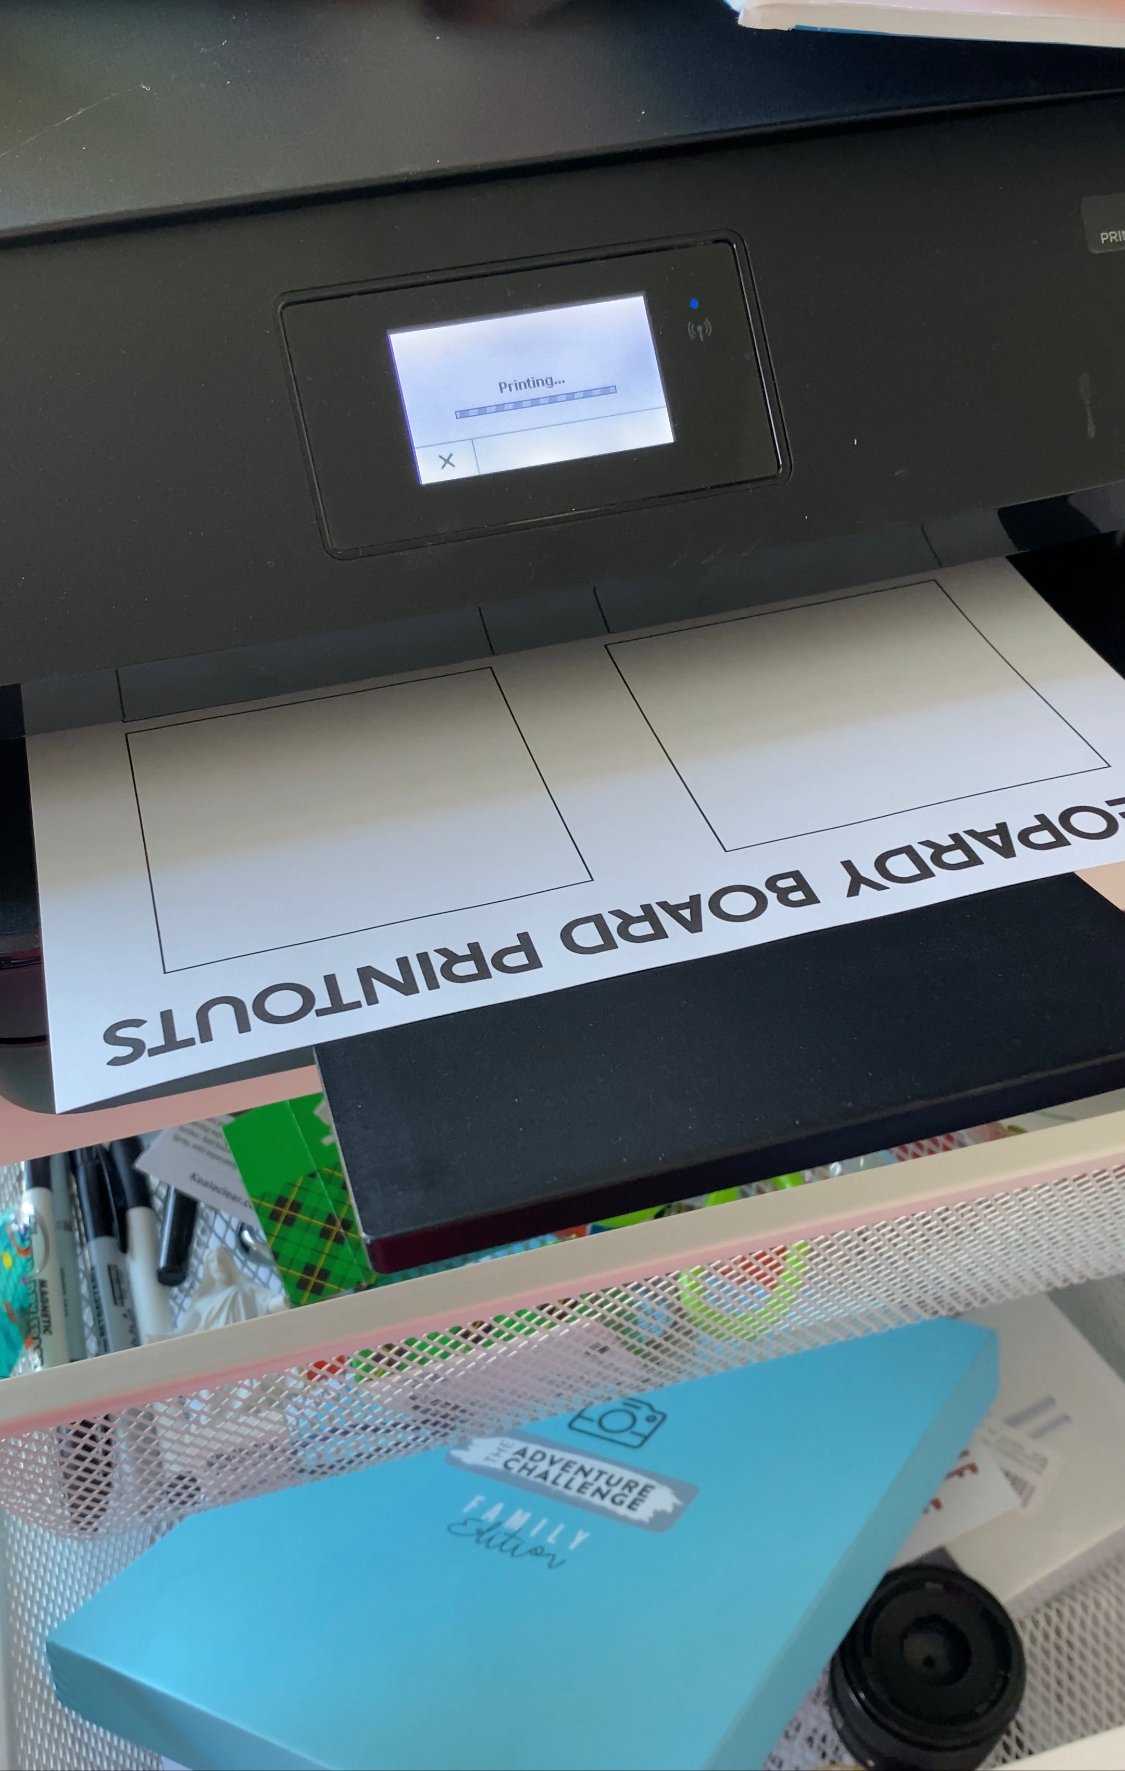 Paper on a printer